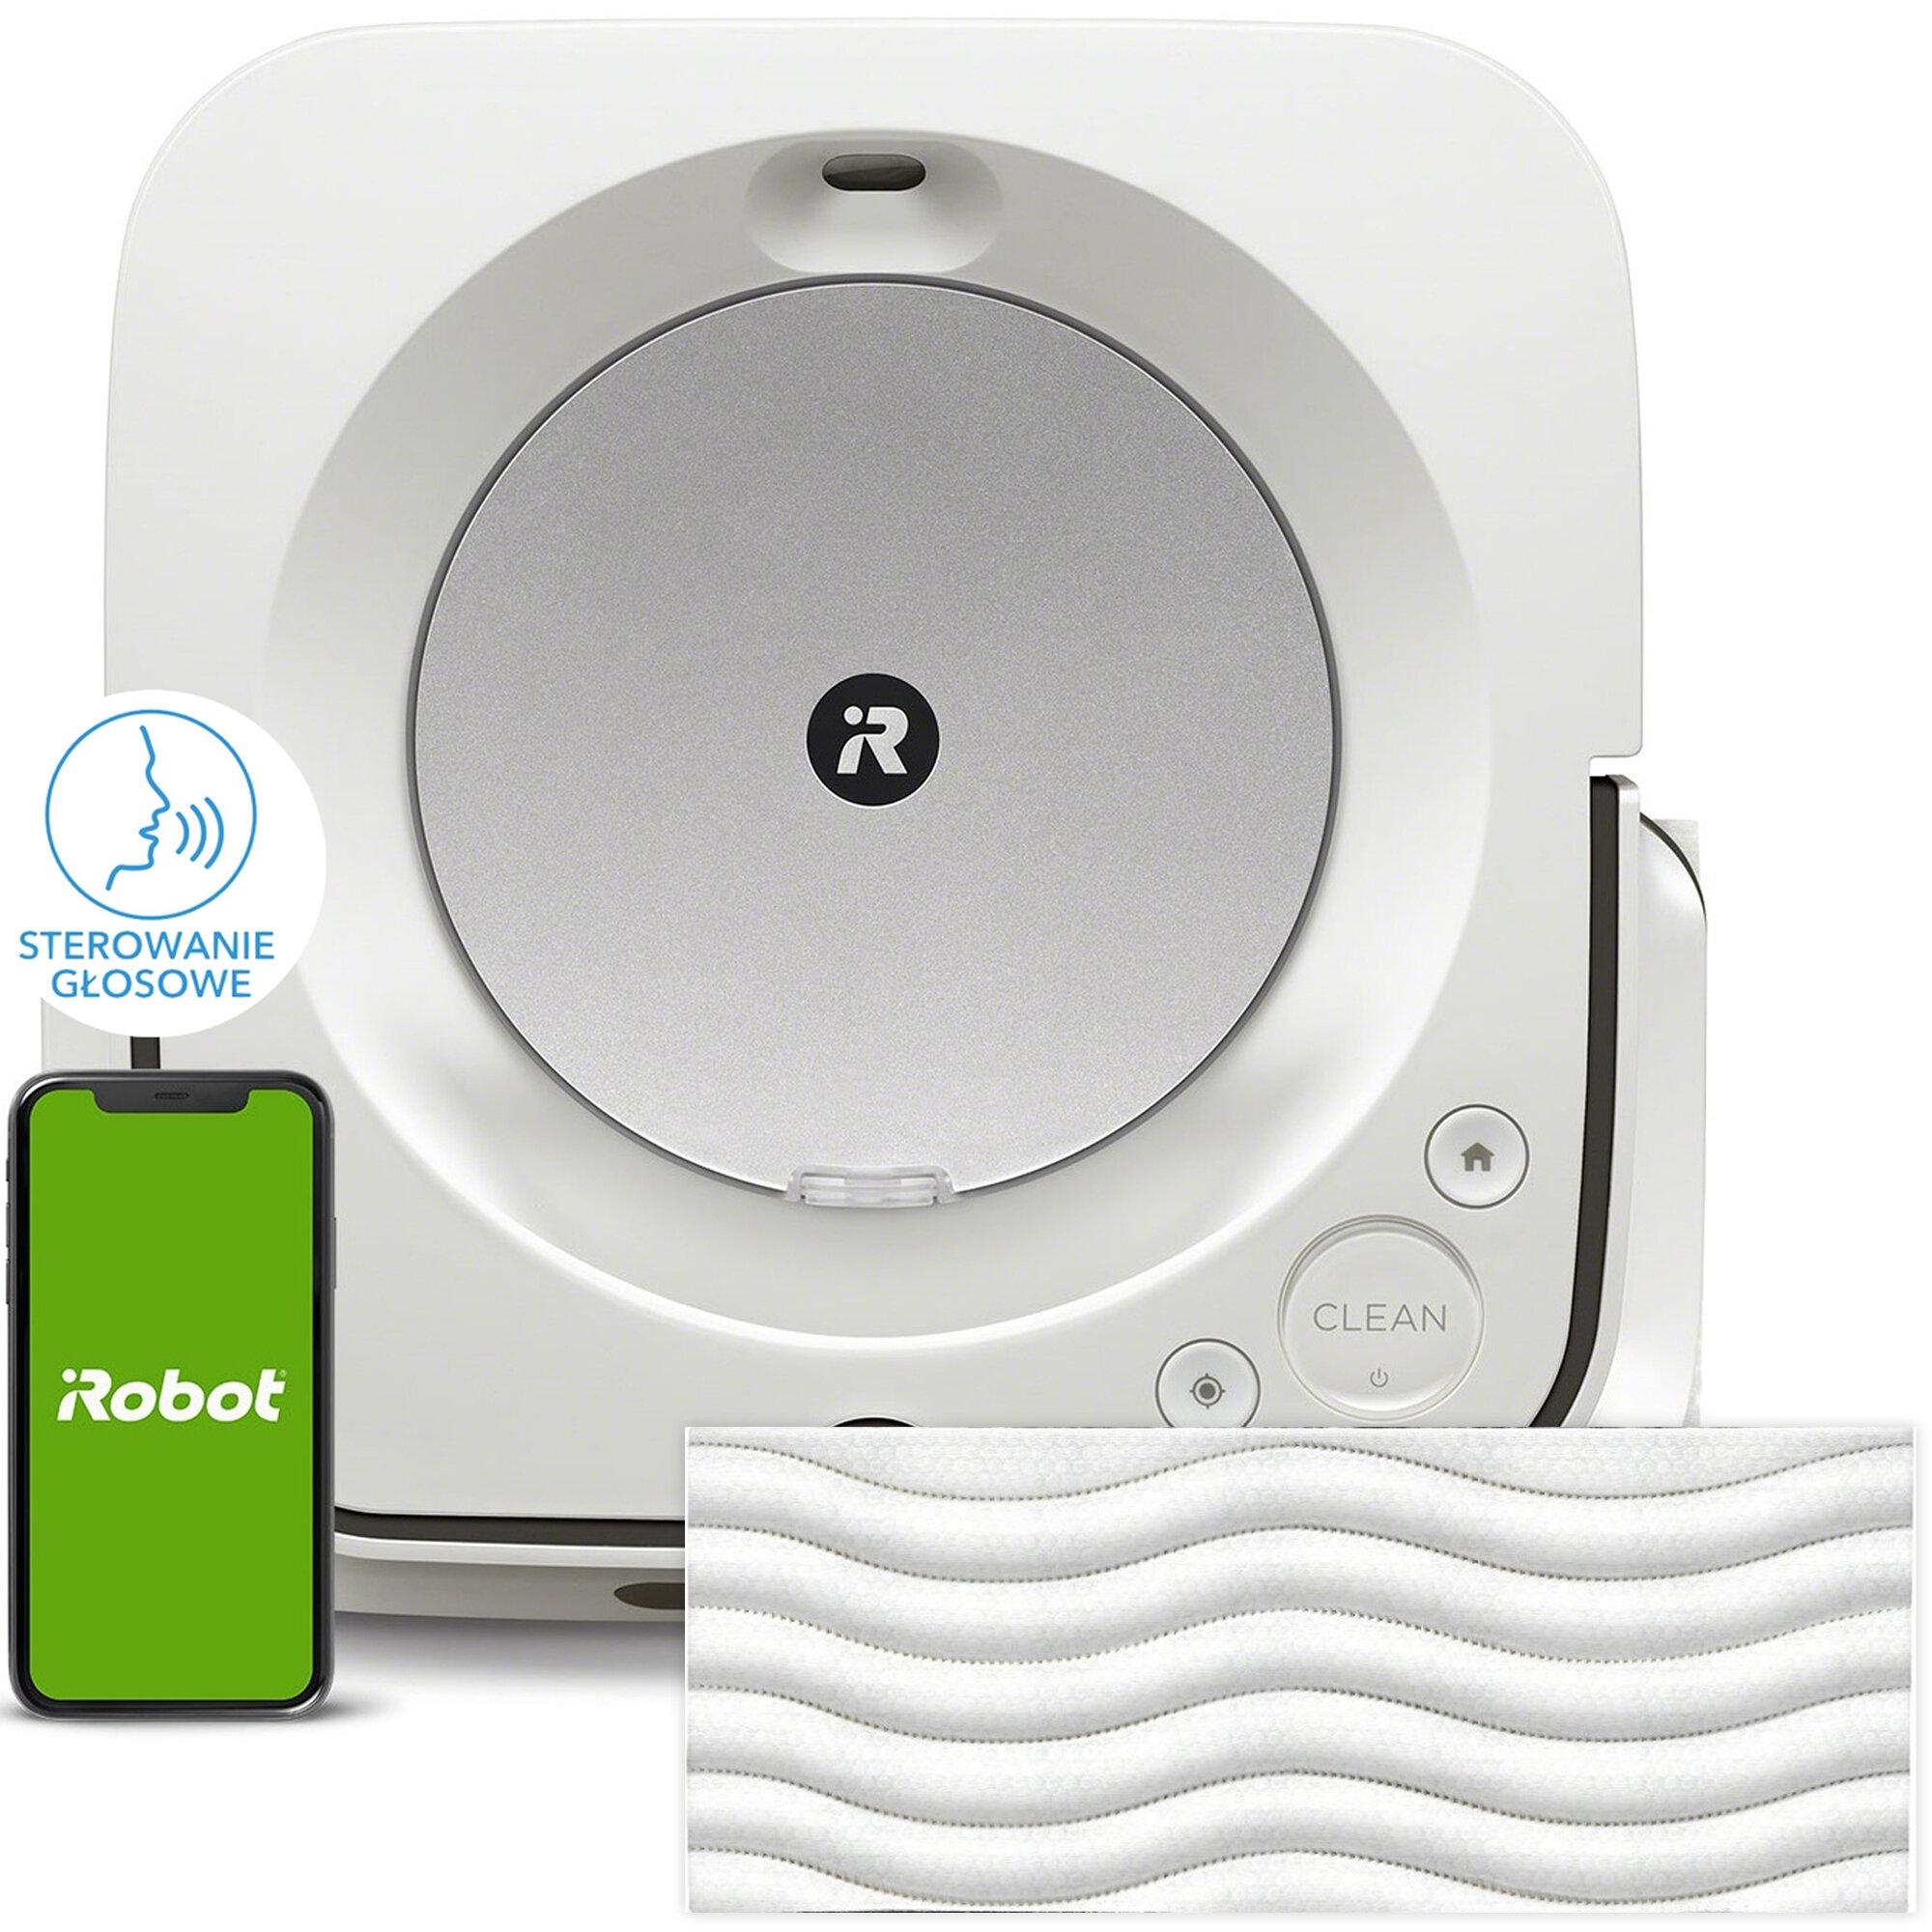 iRobot Braava jet m6 smart Wi-Fi robot mop has a Precision Jet Spray that  mops like you » Gadget Flow